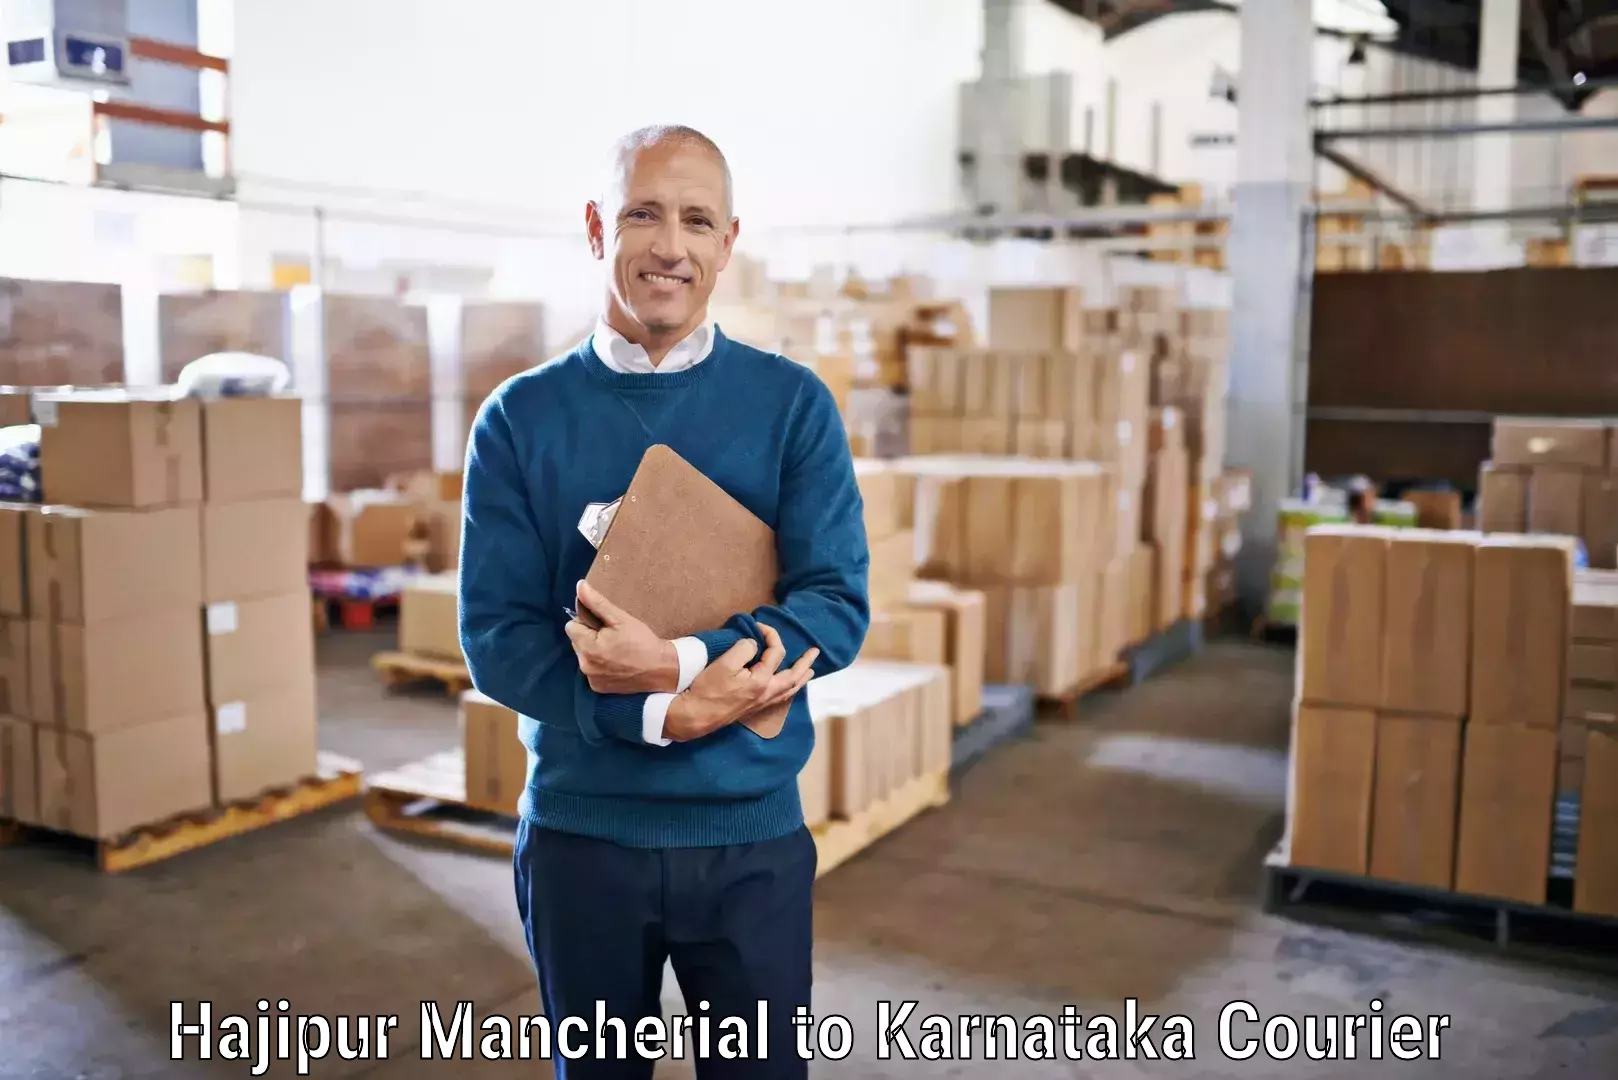 State-of-the-art courier technology Hajipur Mancherial to Karwar